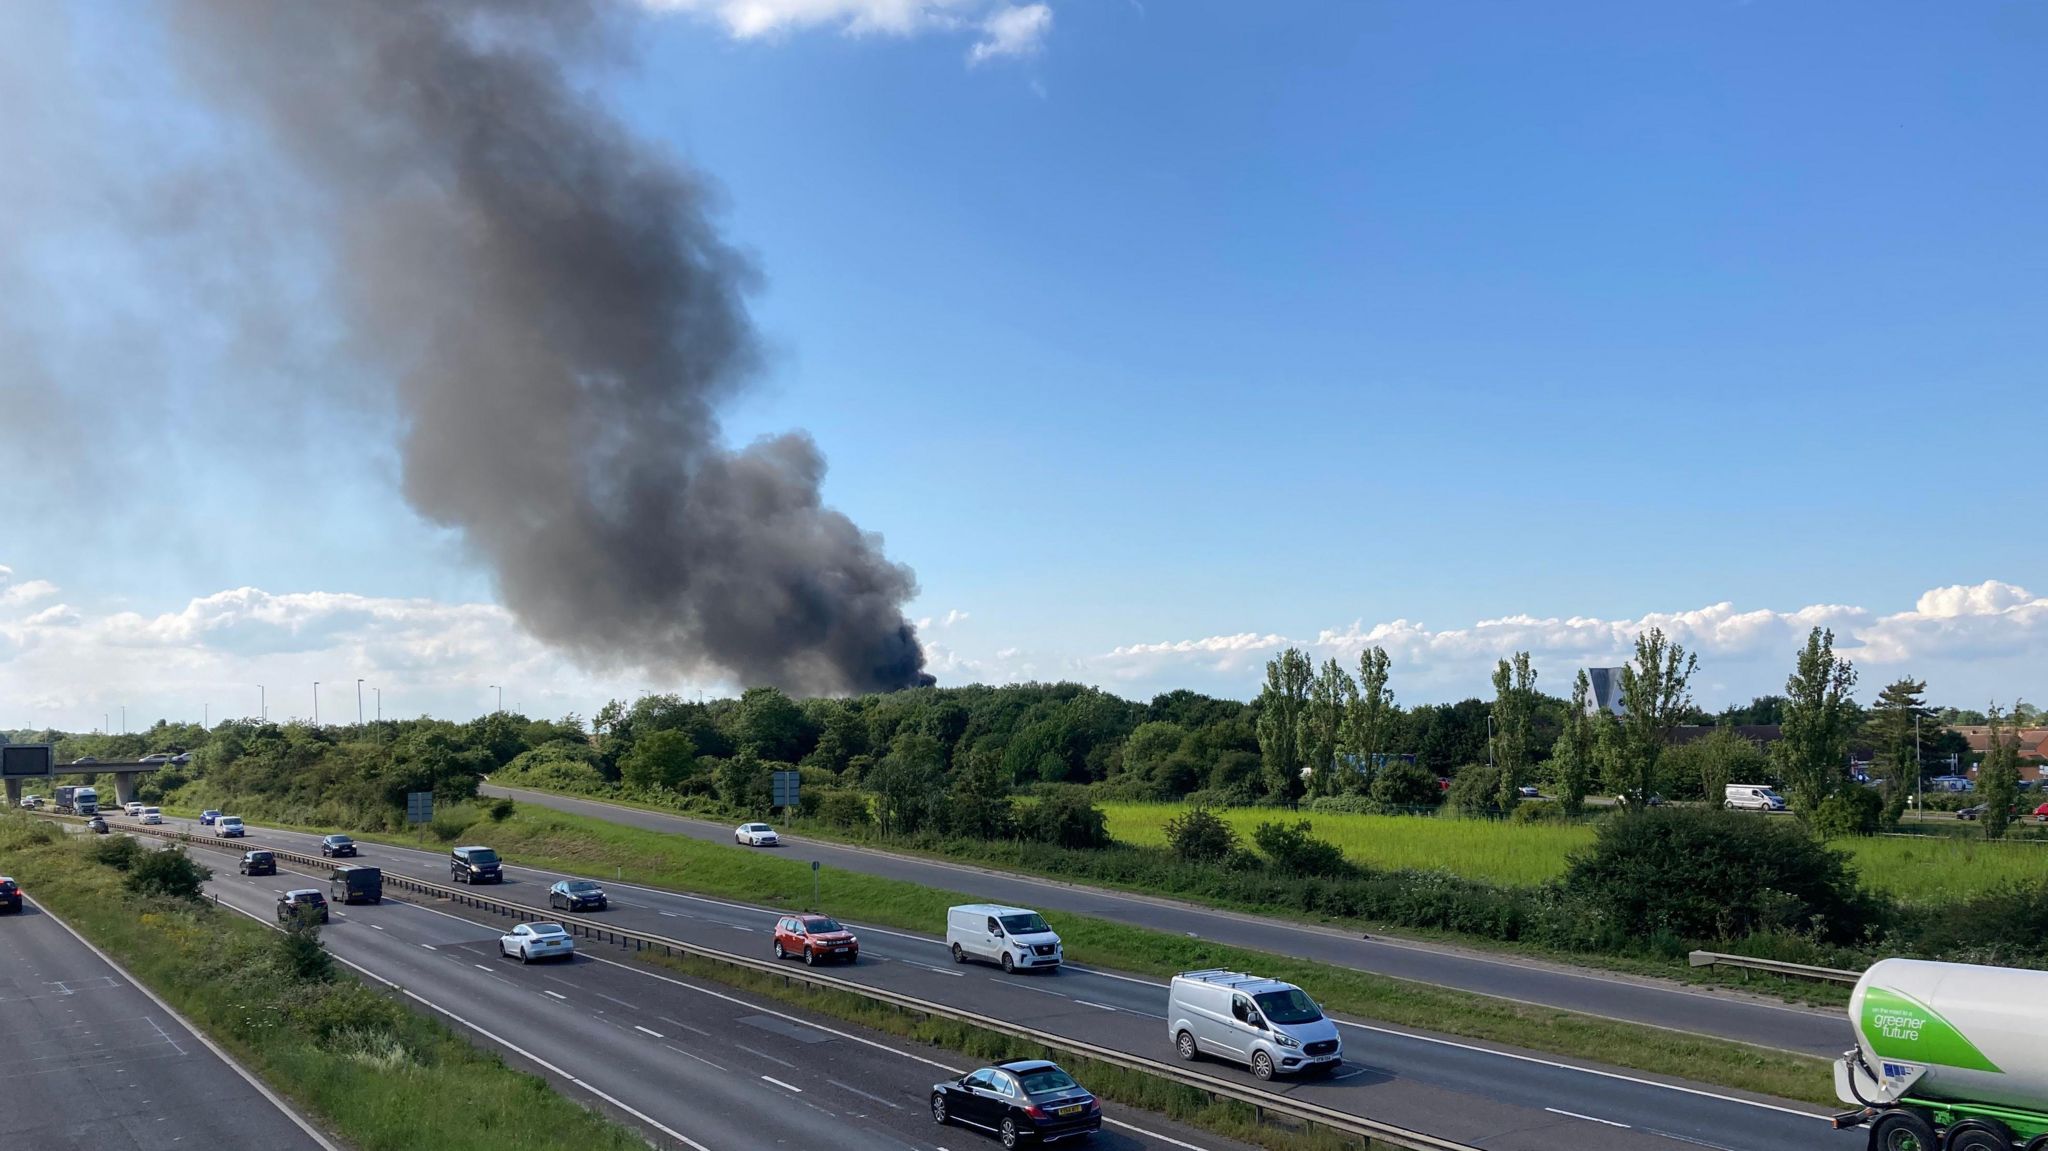 Large plume of black smoke rising above trees on the edge of the A14 near Milton, Cambridgeshire